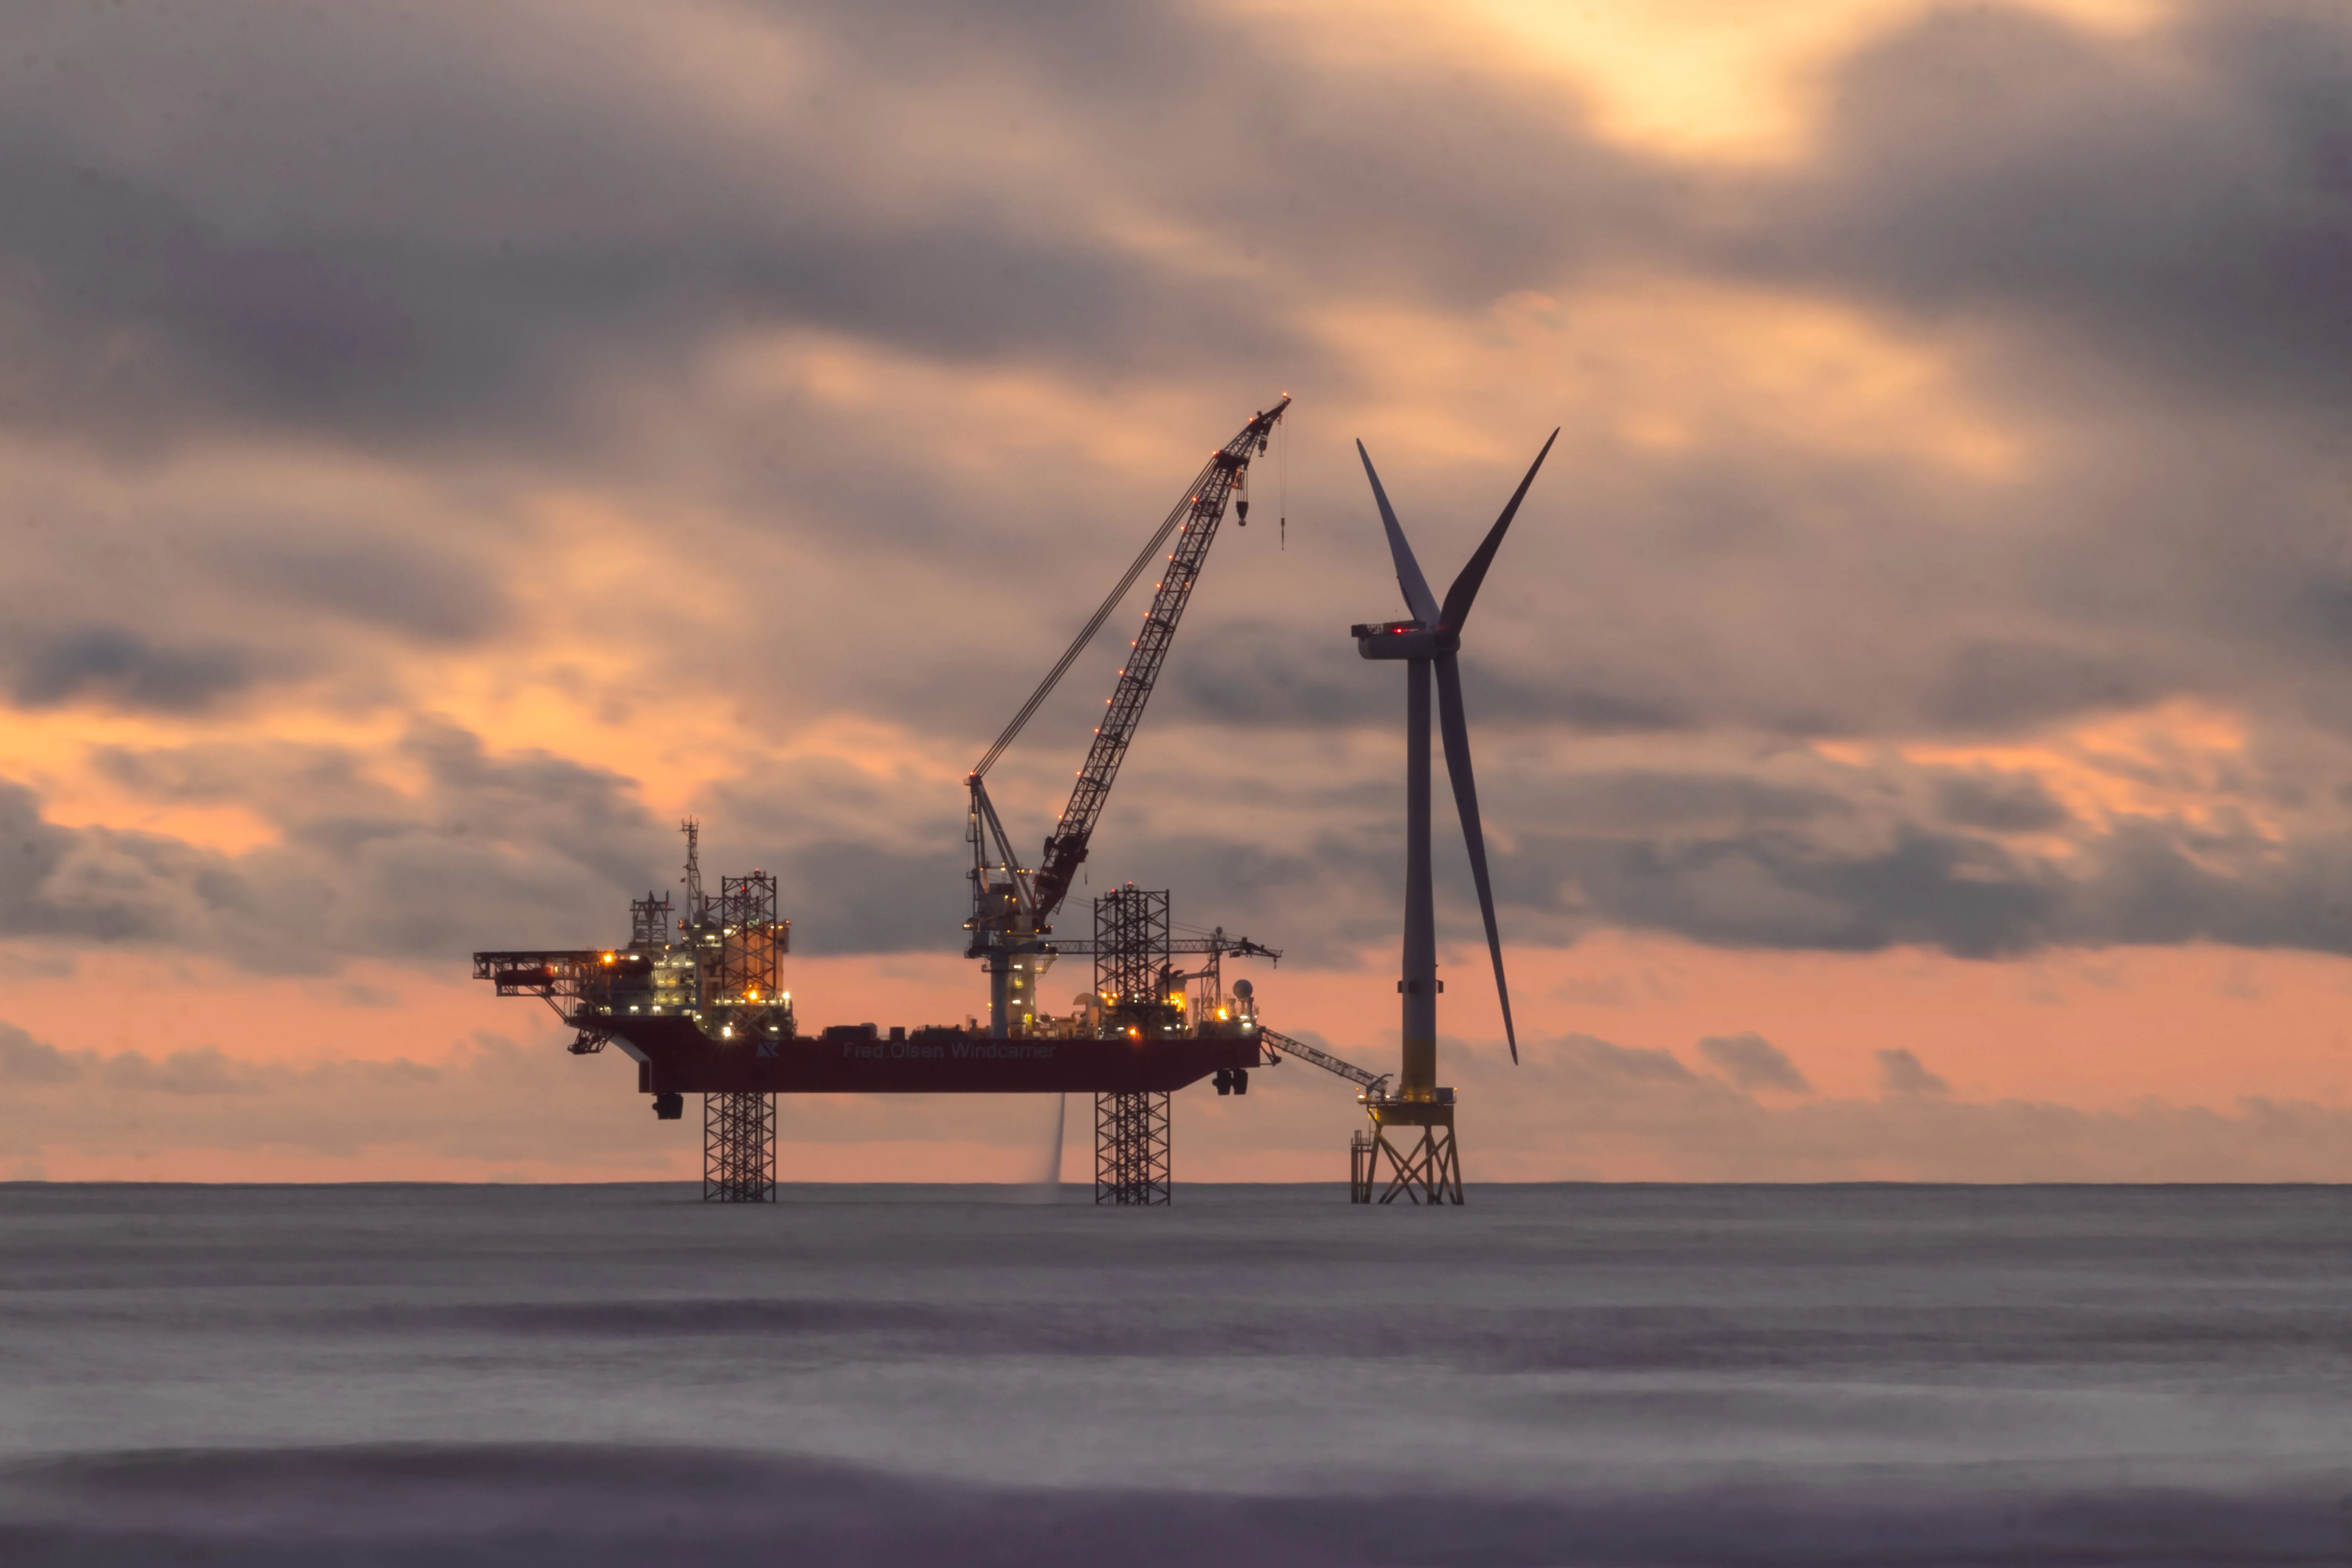 wind turbine instillation undertaking maintenance at an offshore wind farm location